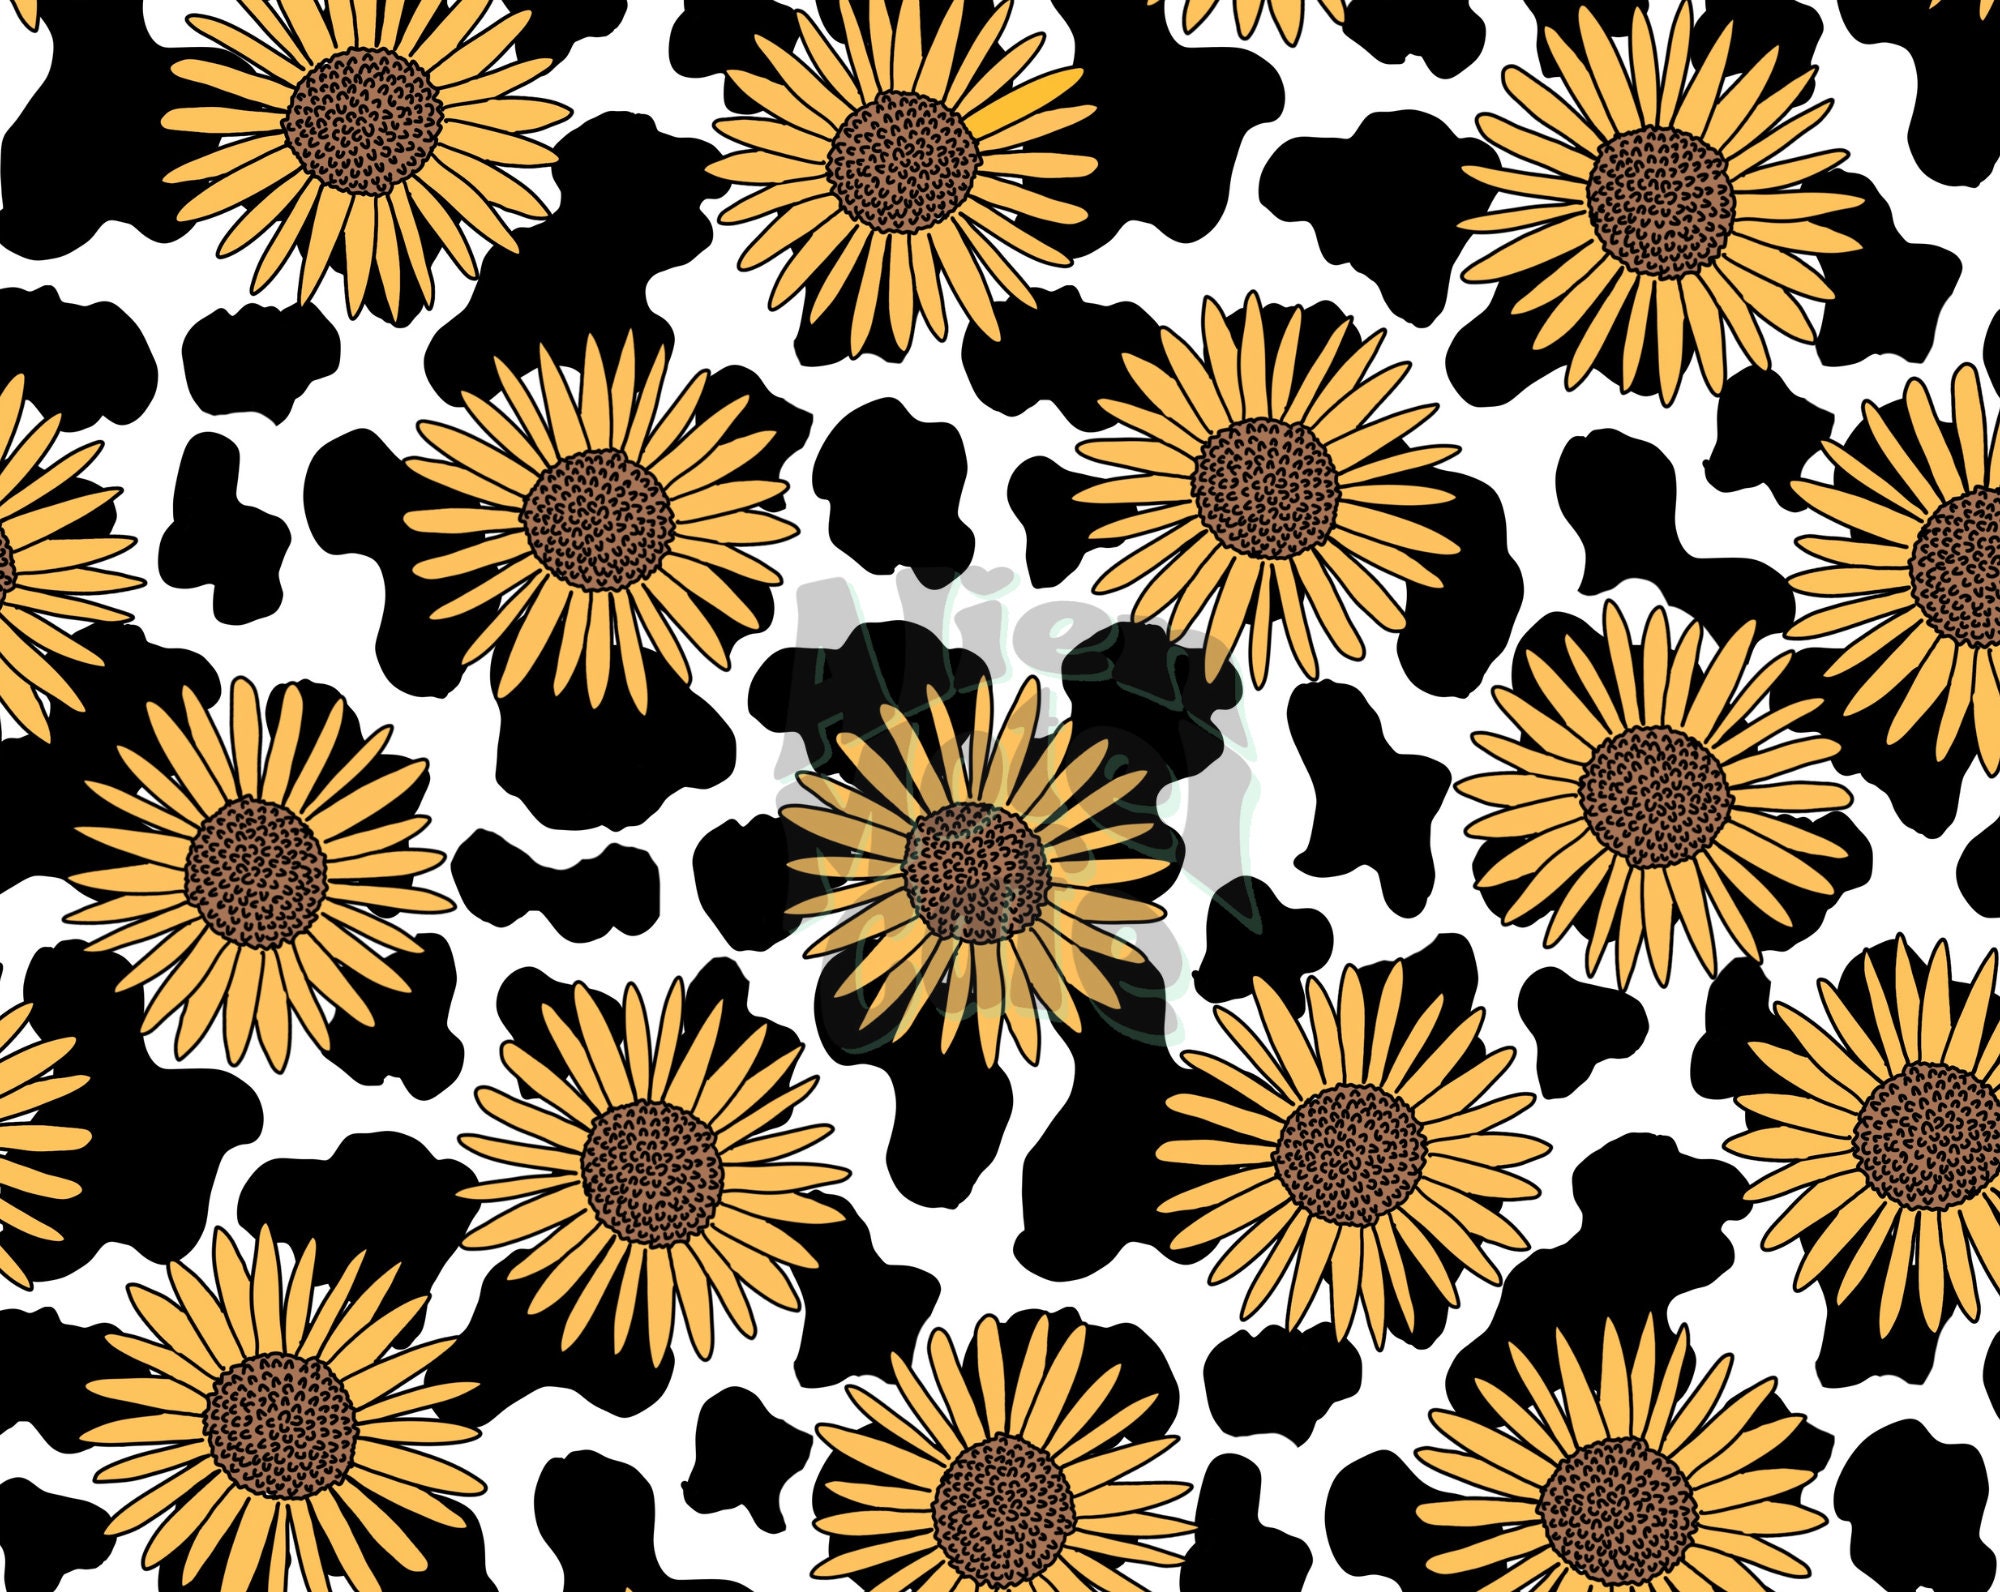 Sunflowers Cow Print Seamless Repeat Digital Pattern Repeat 